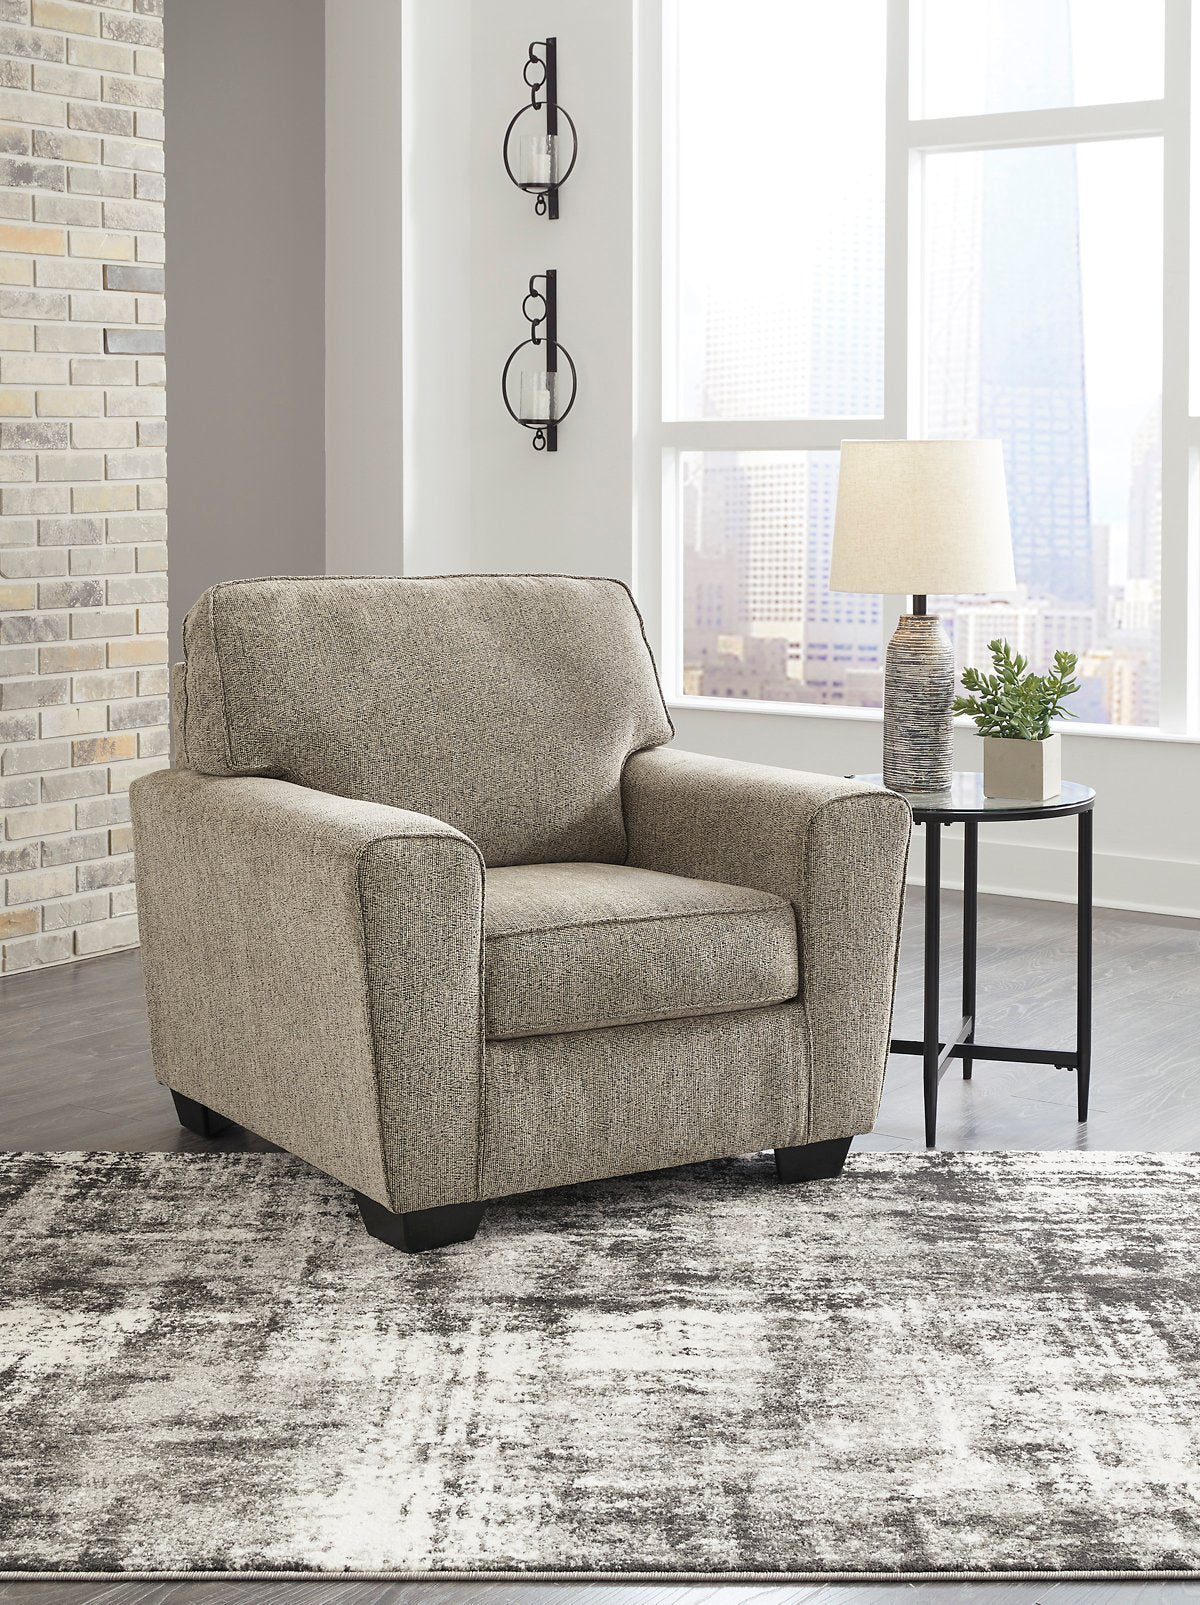 McCluer Chair - Half Price Furniture